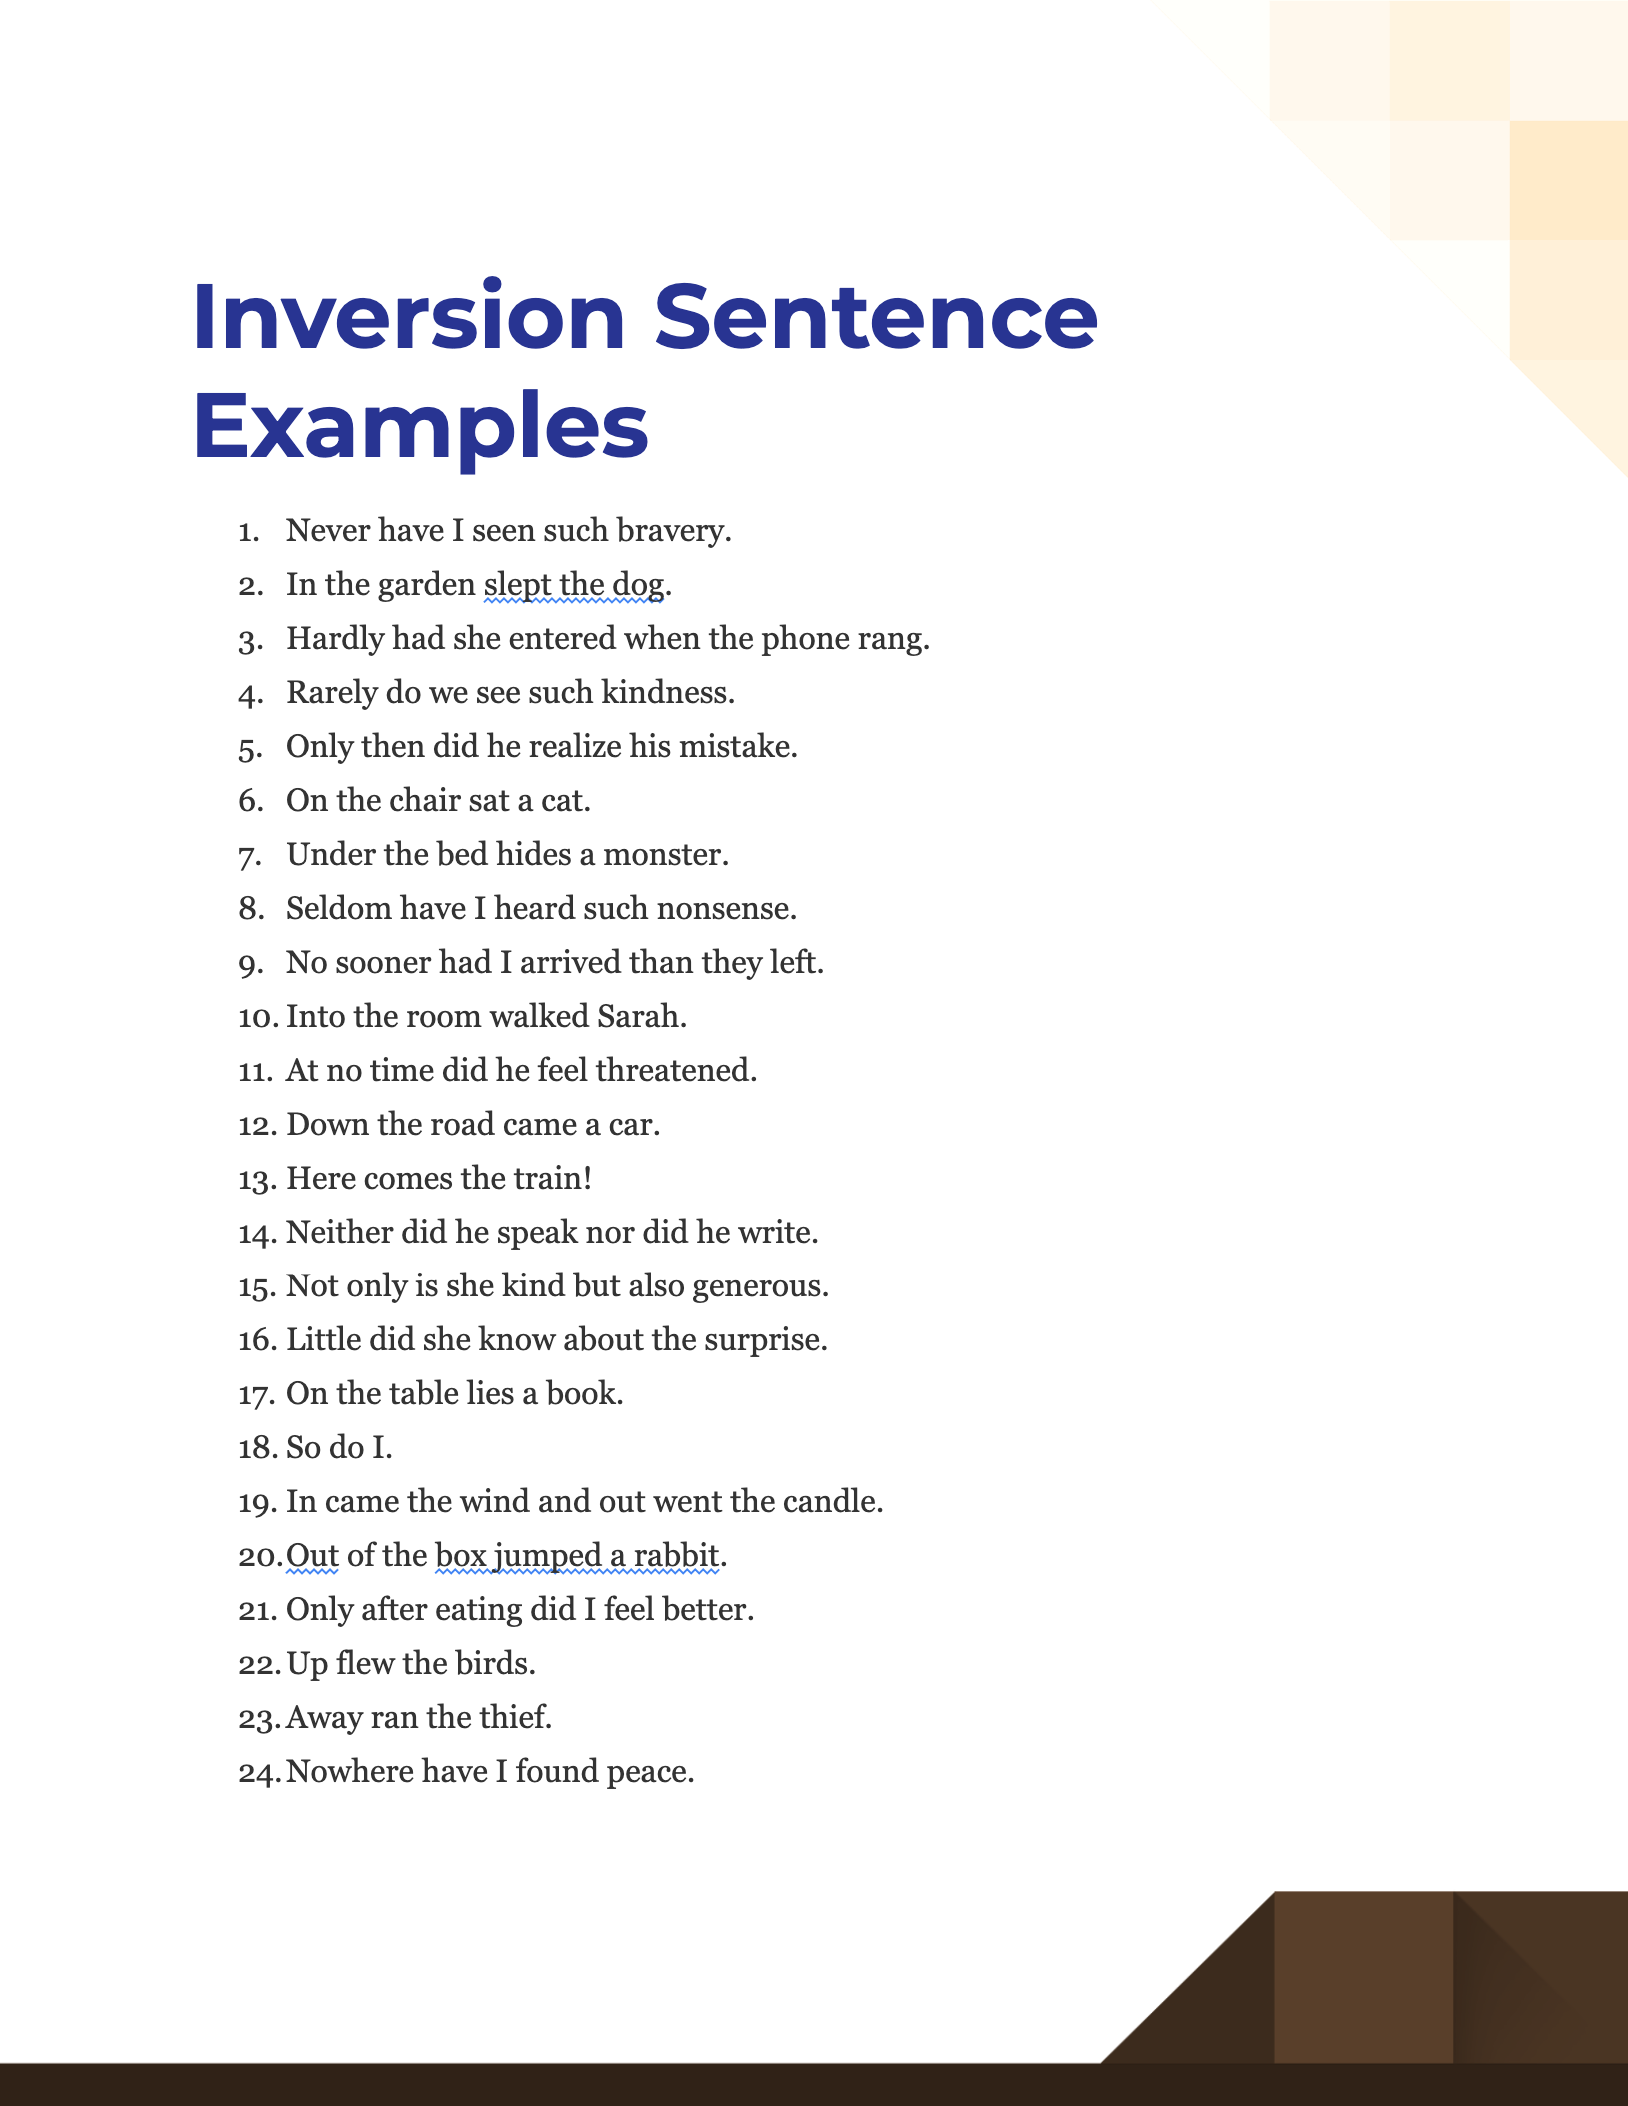 inversion sentence